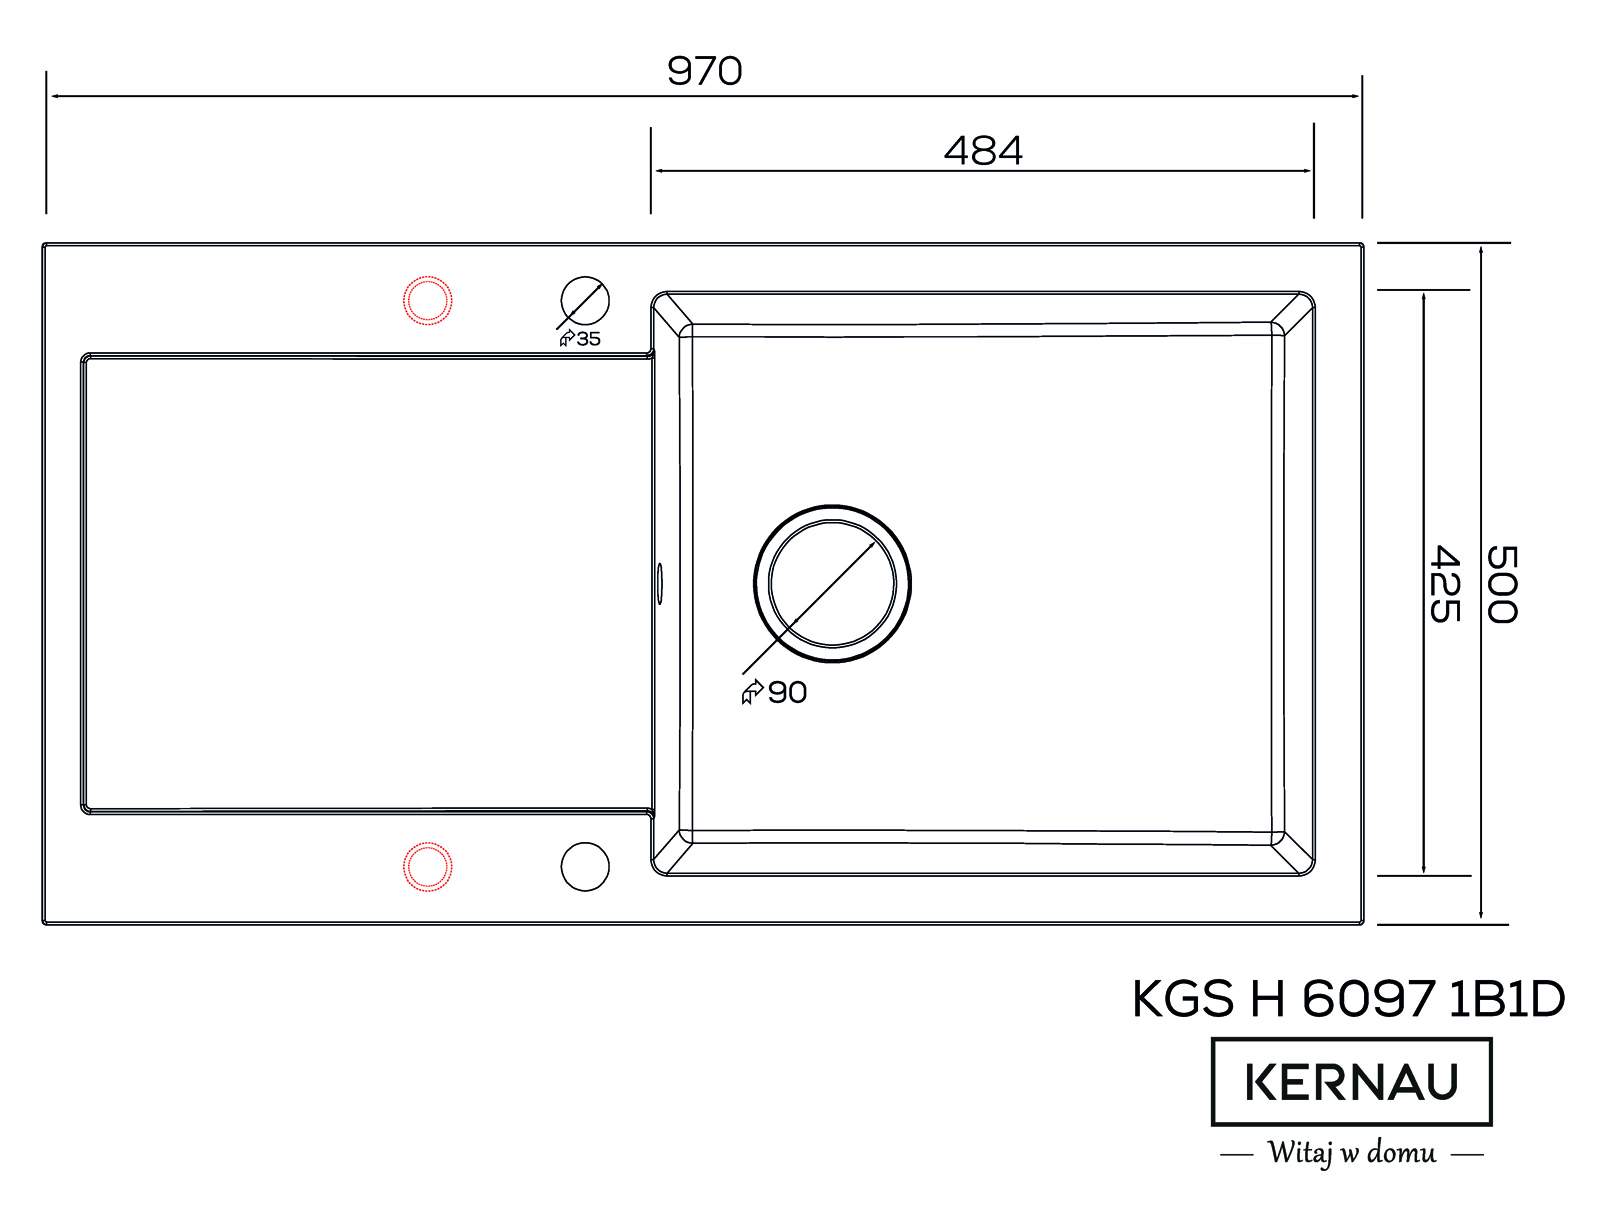 Кухонная мойка KERNAU KGS H 6097 1B1D BLACK METALLIC